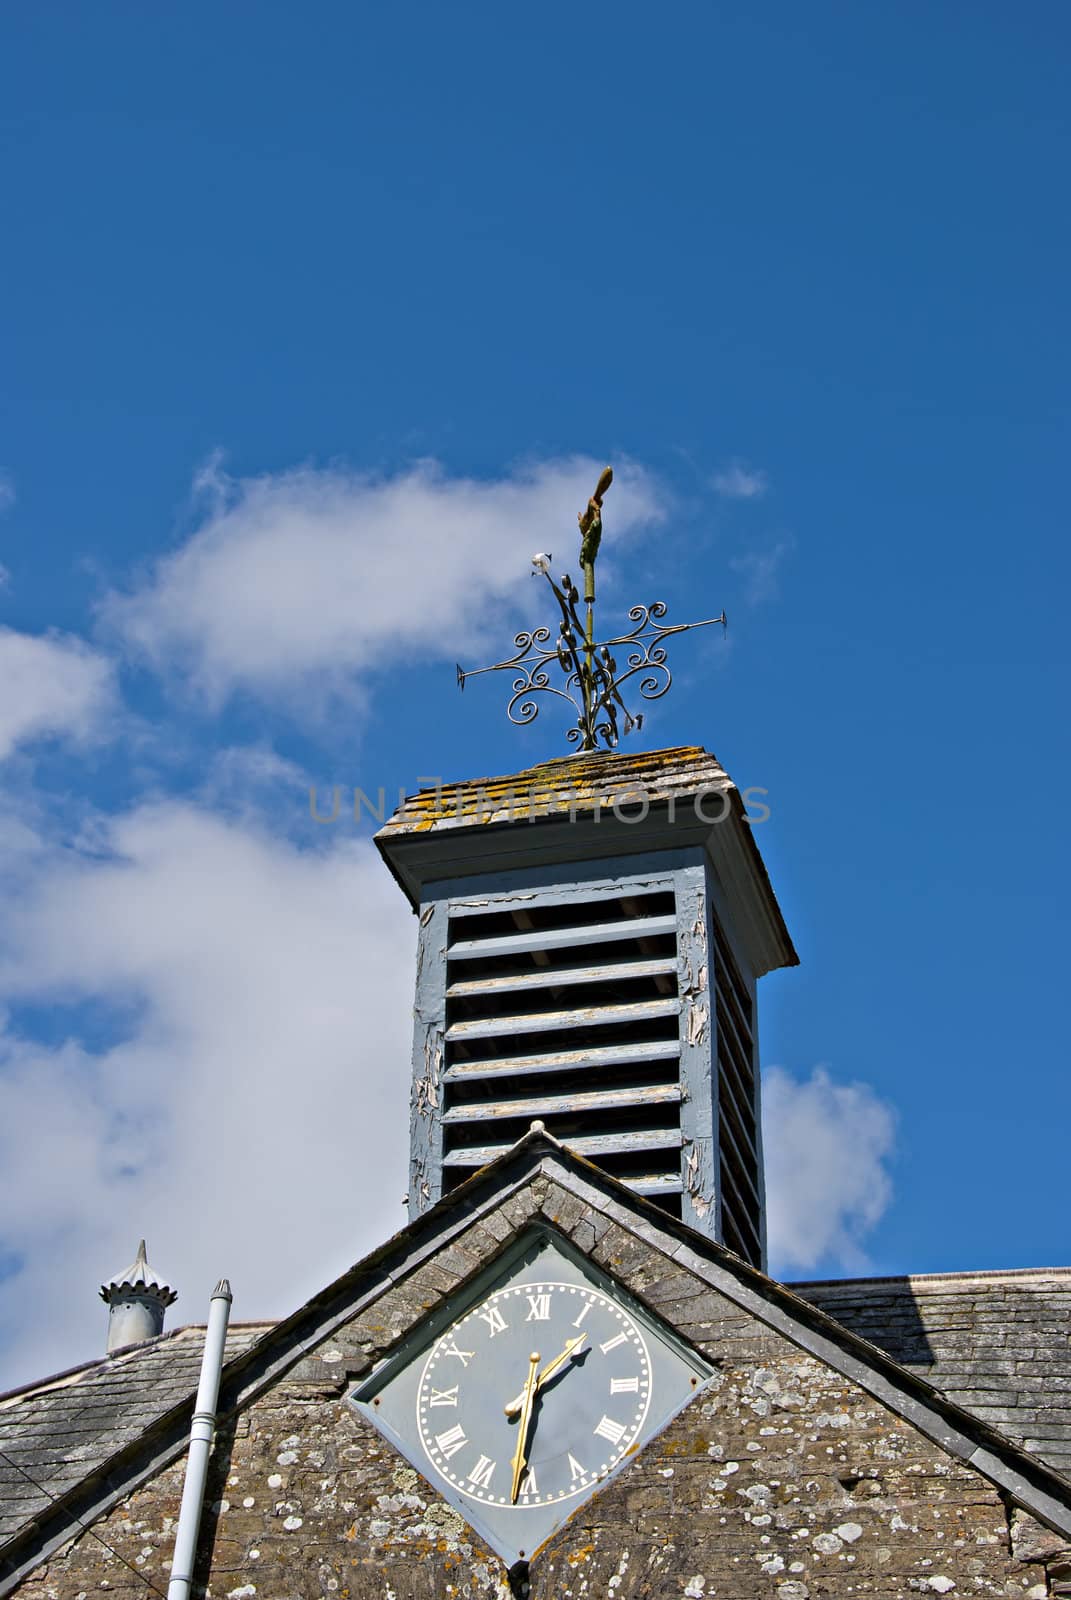 A Fox Weathervane and Clocktower